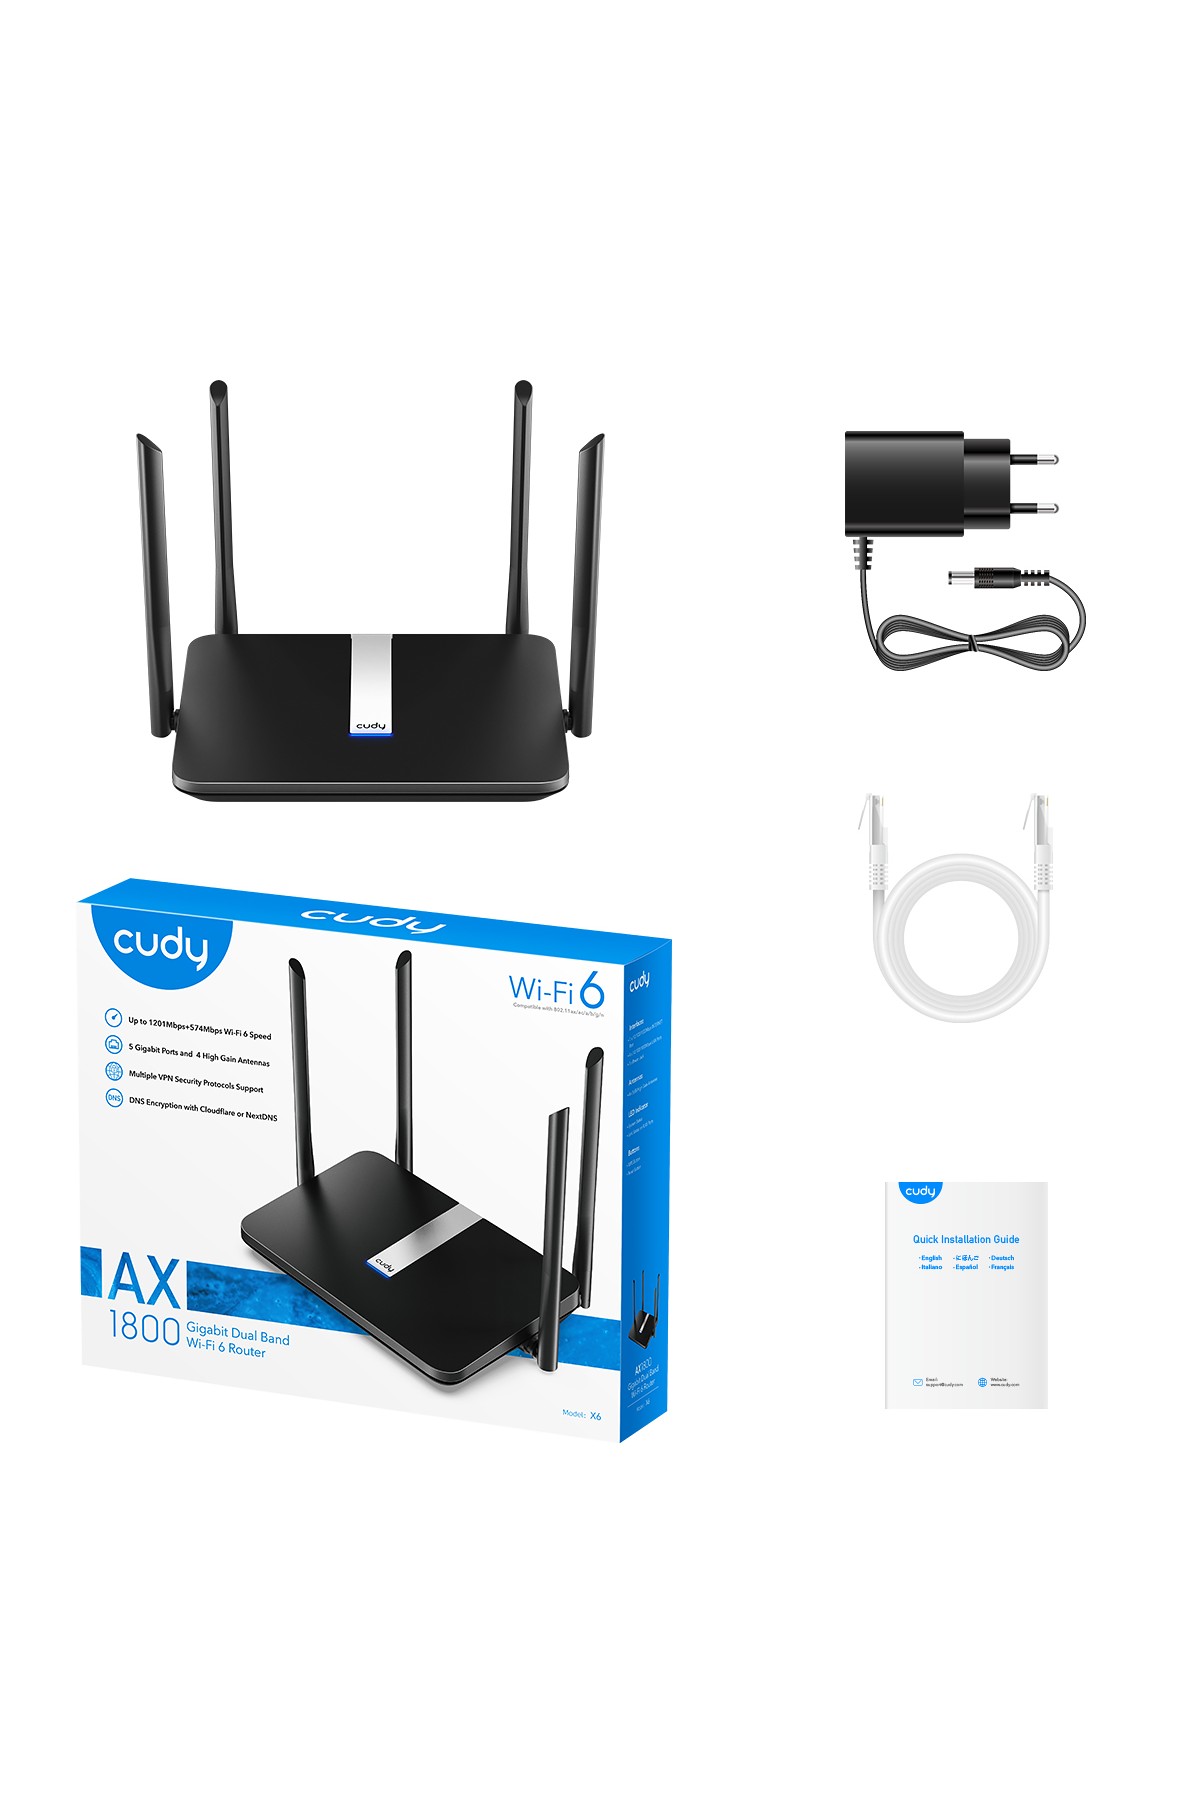 AX1800 Gigabit Wi-Fi 6 Mesh Router, Model: X6